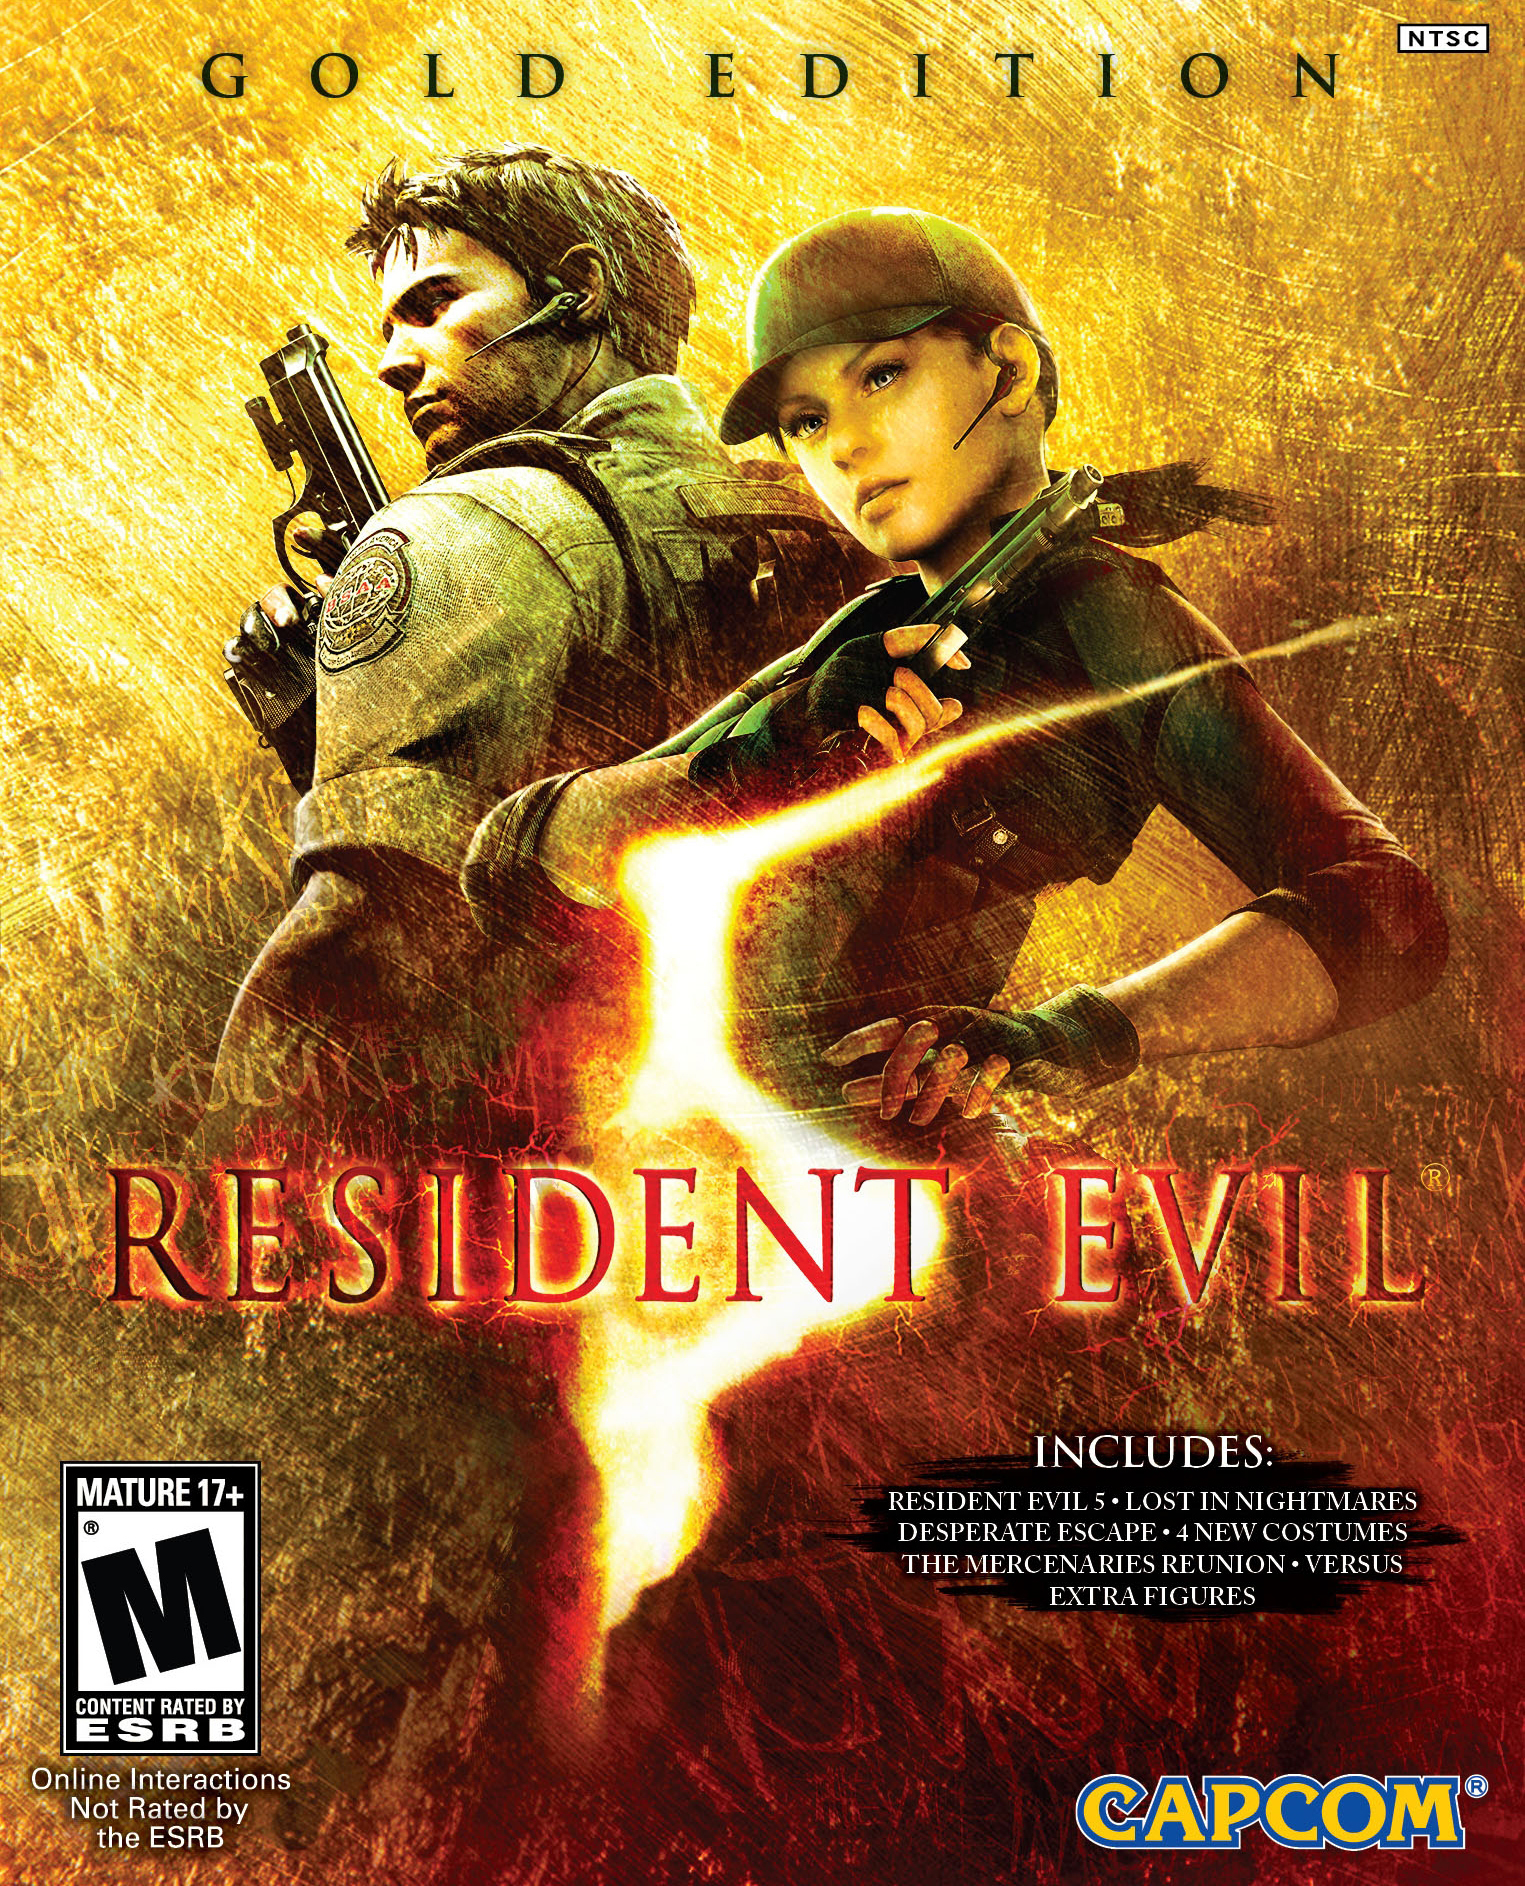 Resident Evil Village Gold Edition - Mercenaries Trailer 